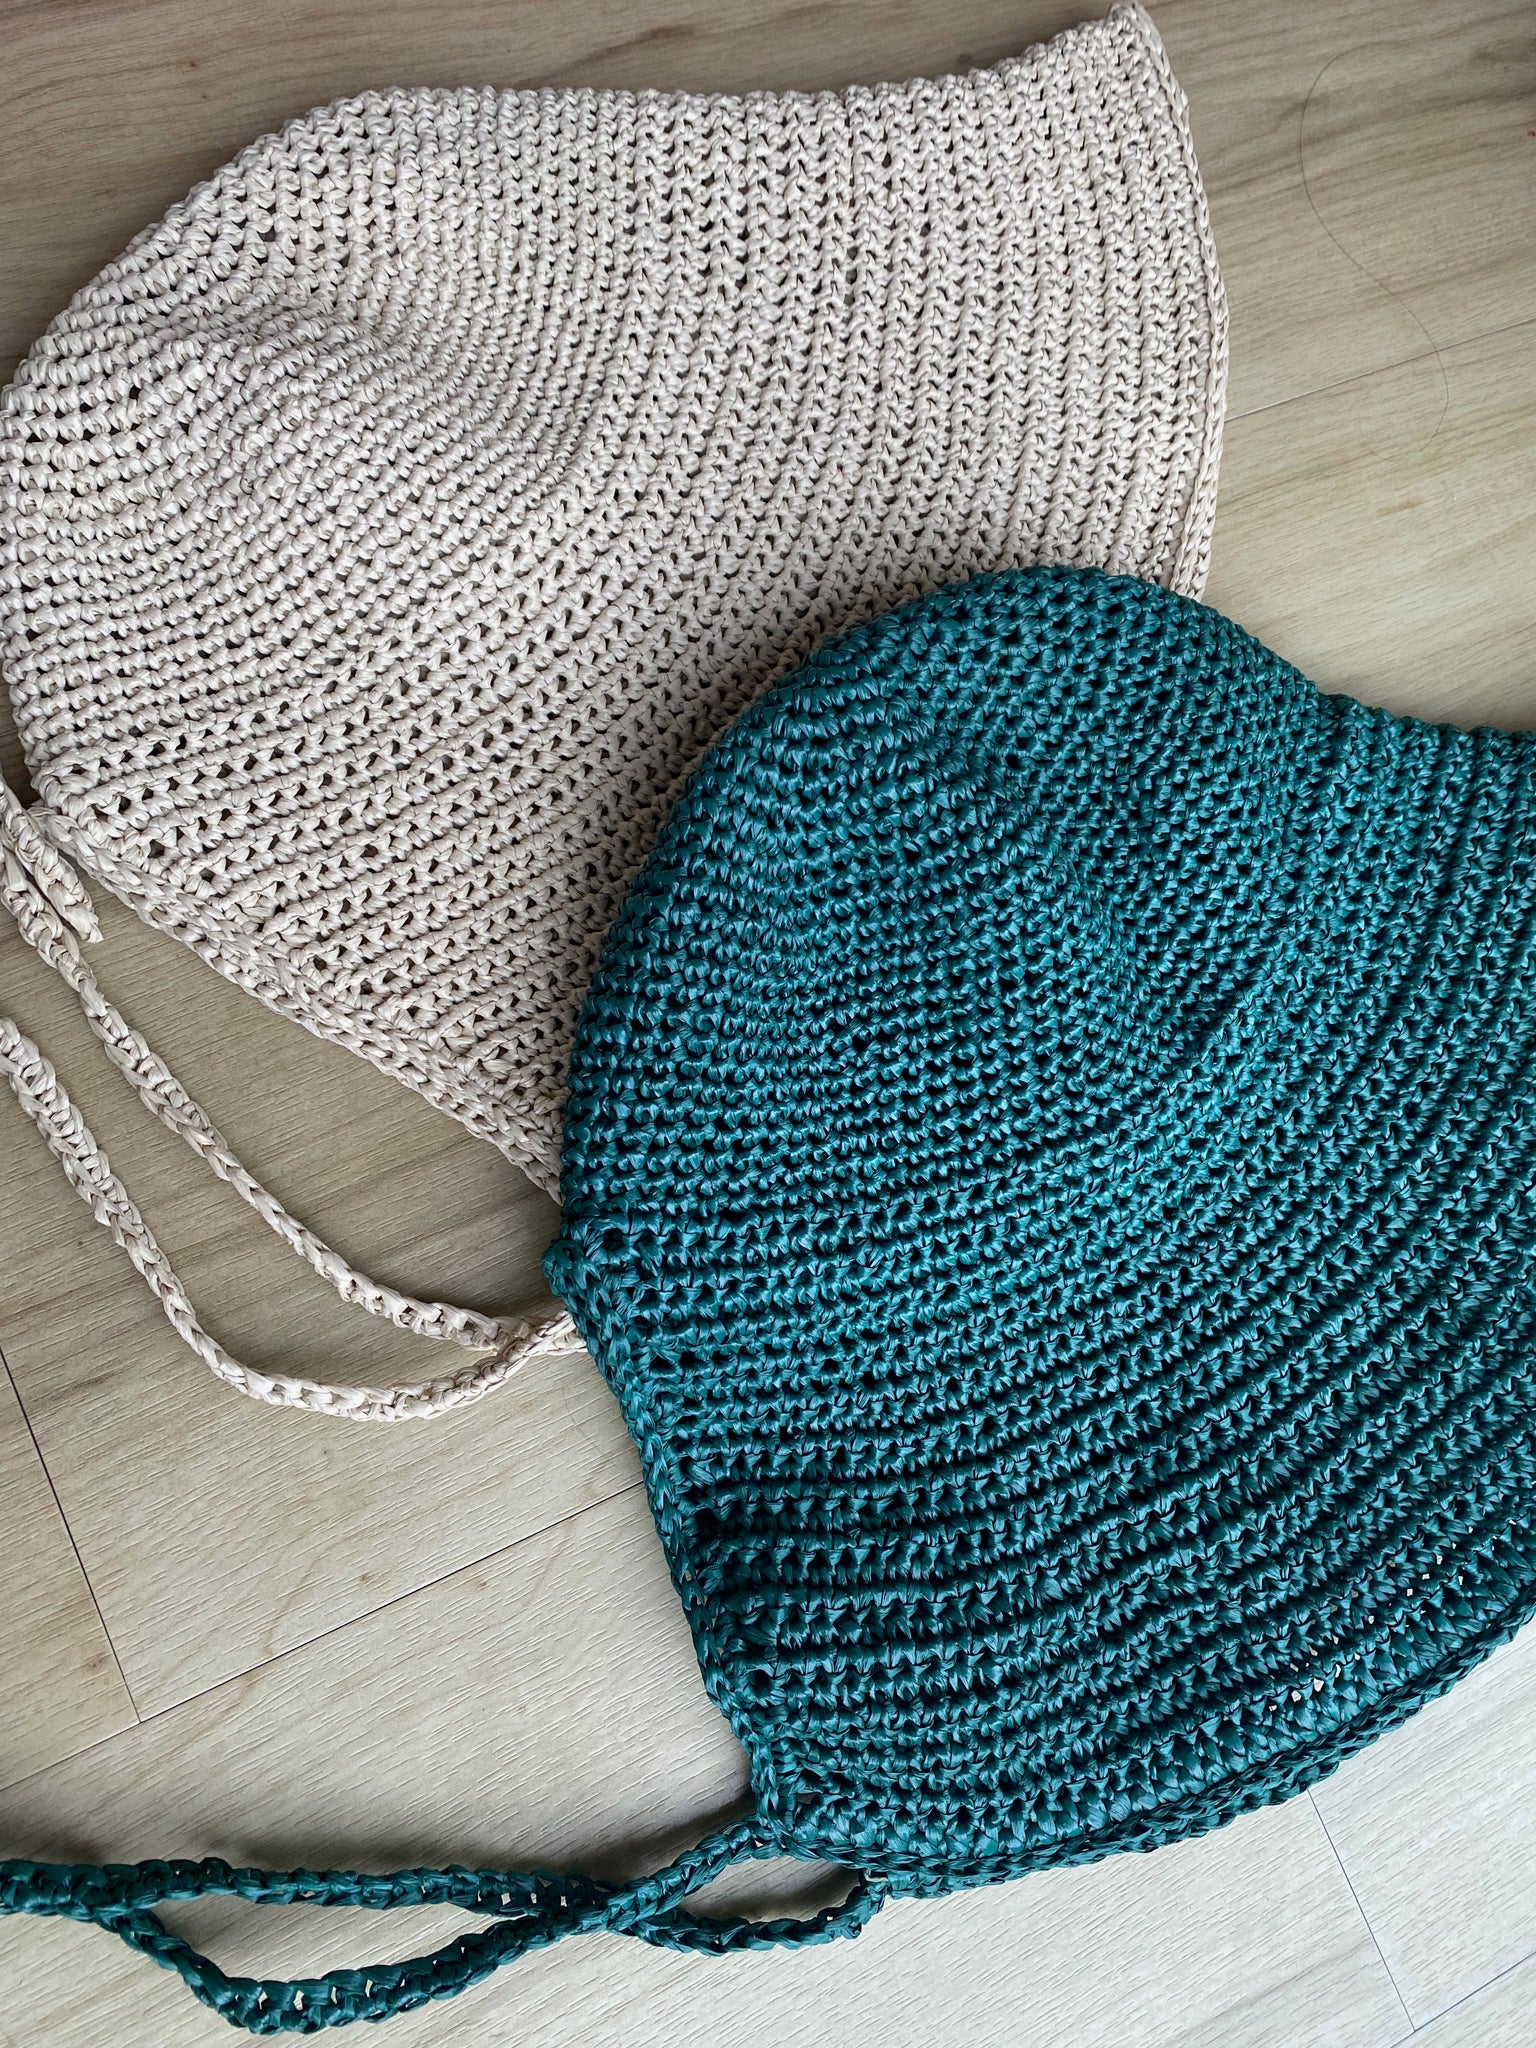 Stranded by the Sea Owl Spun Raffia Crochet Hat Kit - Slow Yarn Crawl 2022